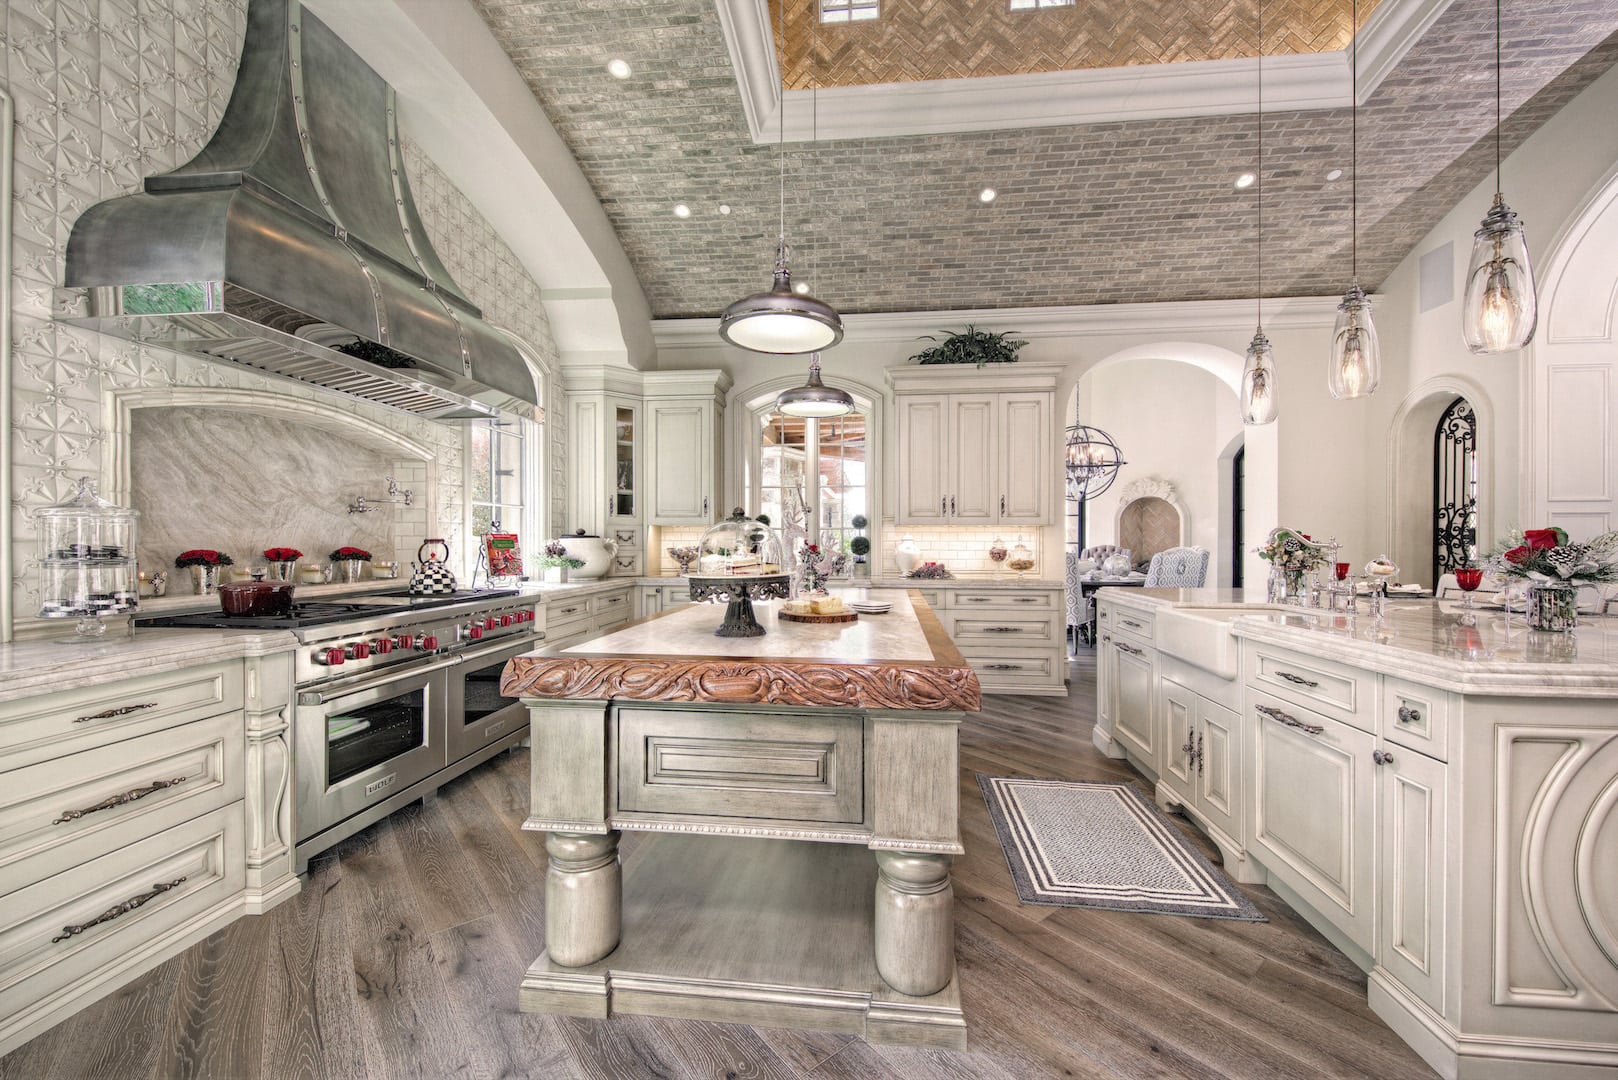 Blog do Eduardo Perez: 18 Stunning Modern Kitchen Designs That Will